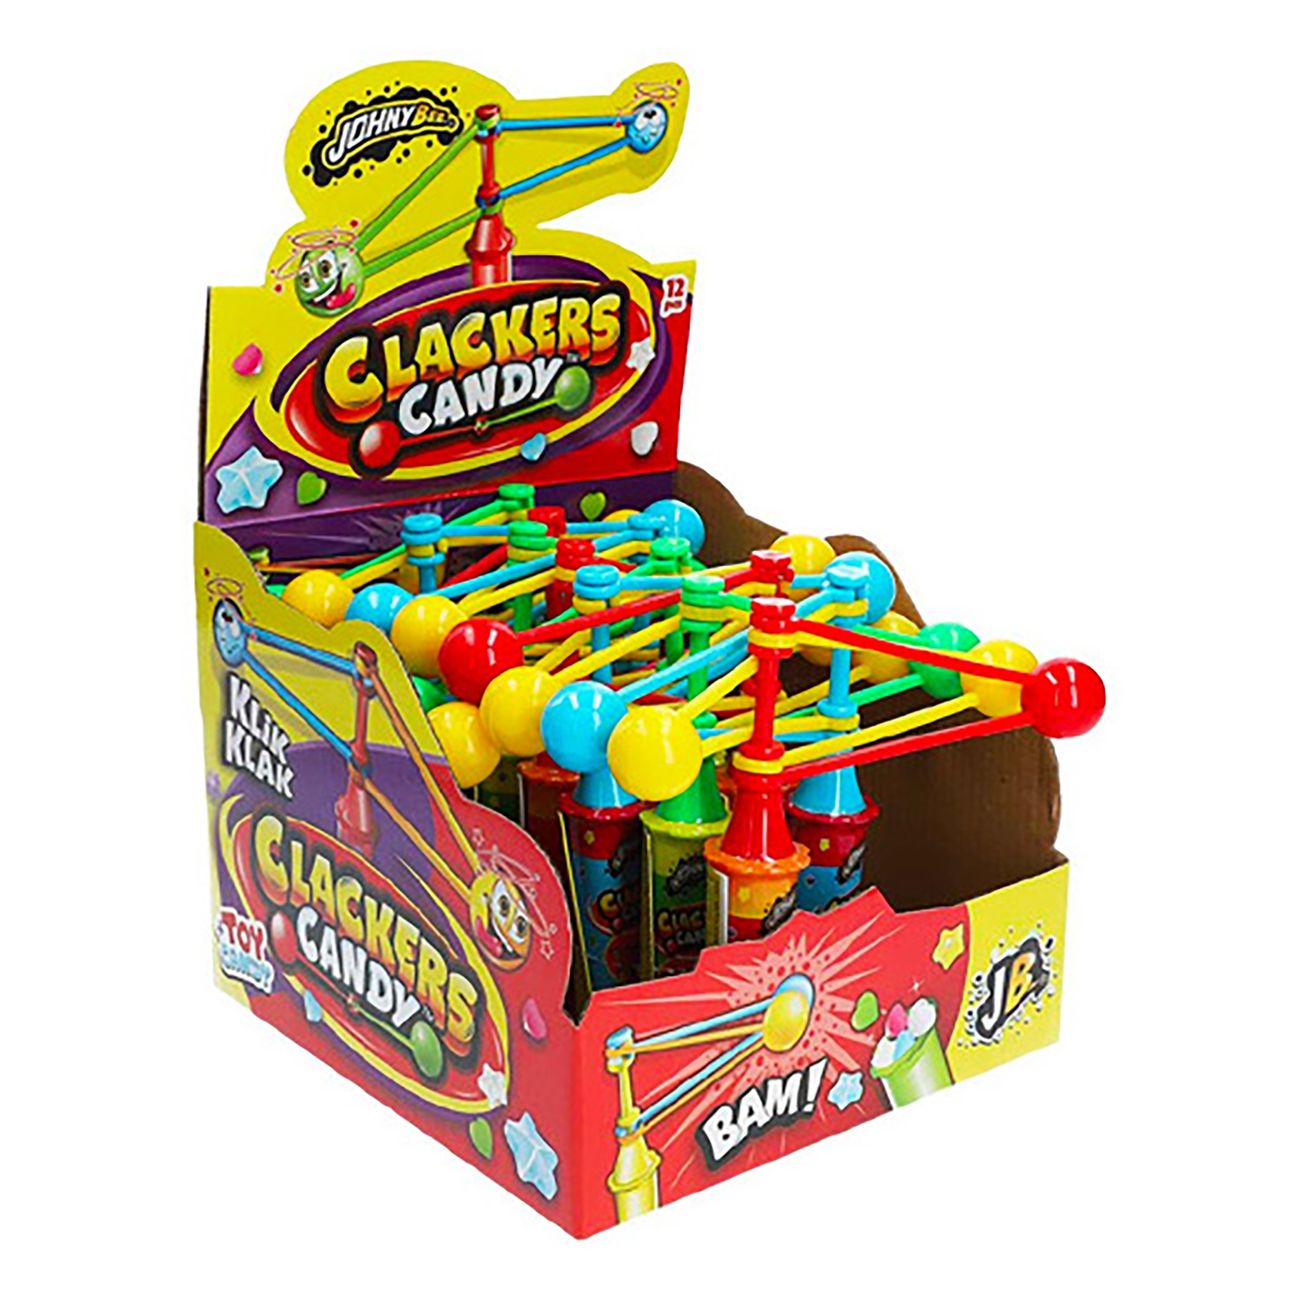 clacker-candy-godis-88802-1